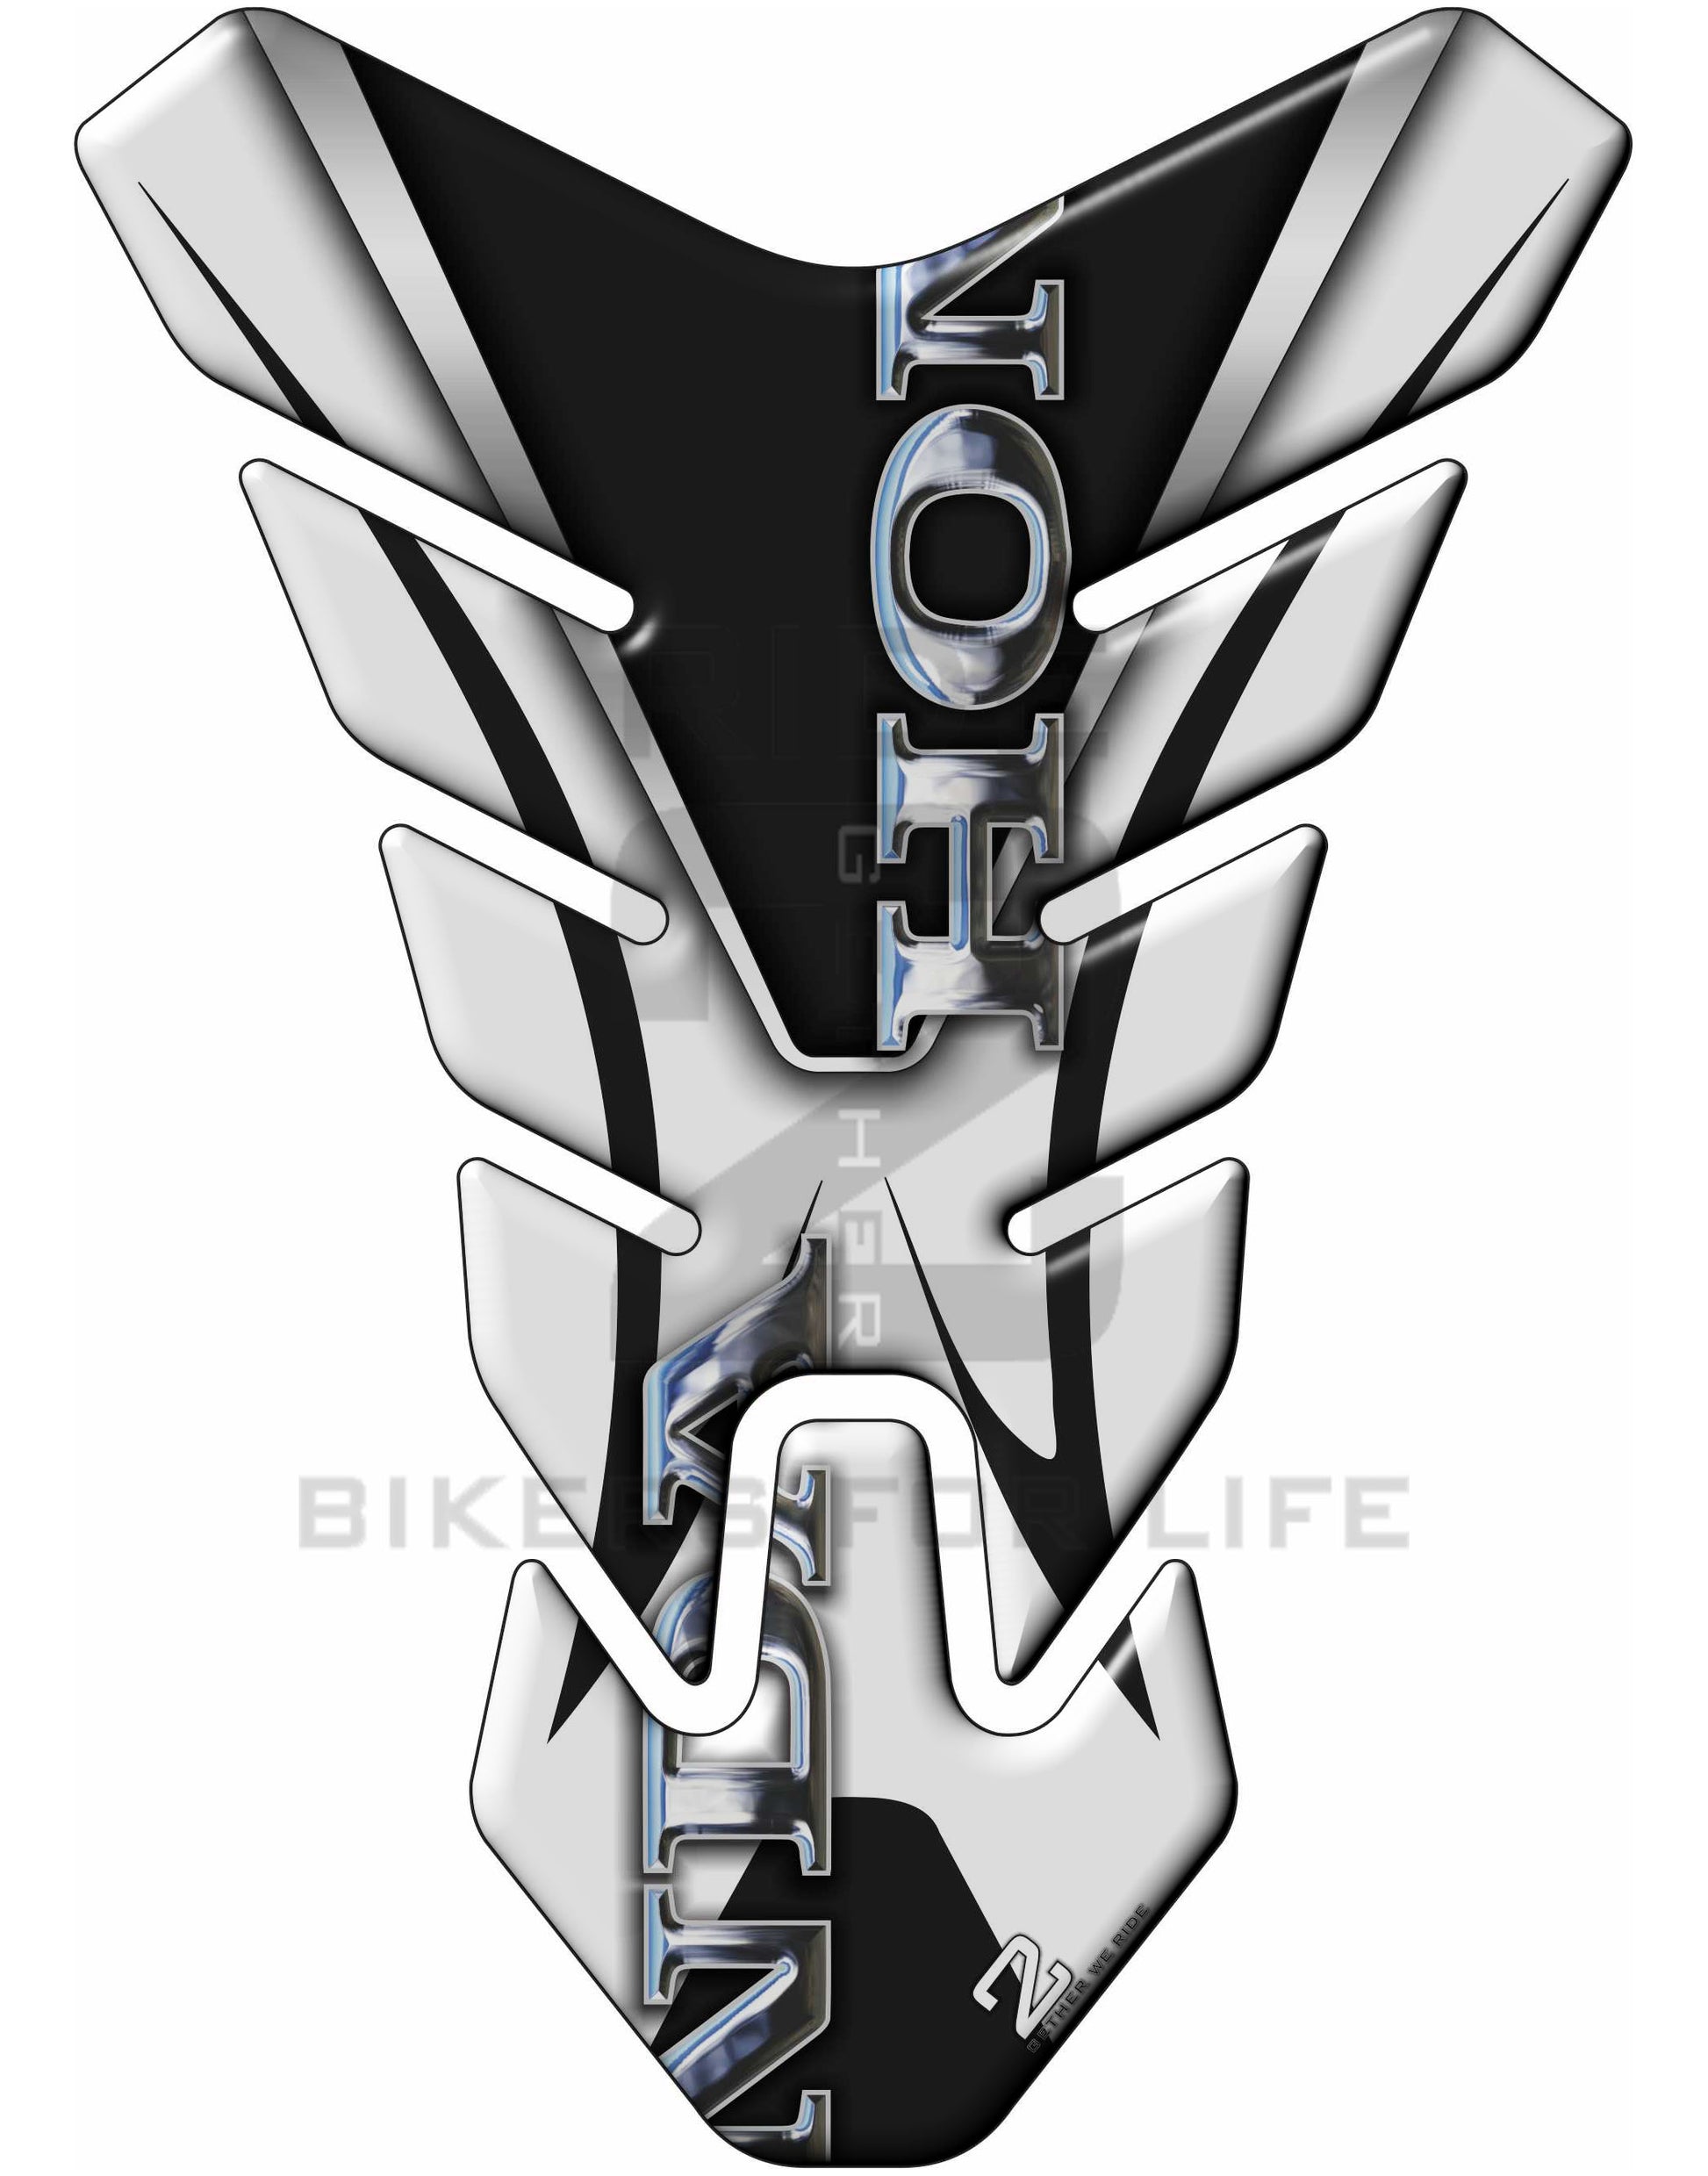 Motor Bike Tank Pad- Honda CBR, NC Series, CB Series, Twin Africa - White and Black Protective Tank Pad. Universal Fit.